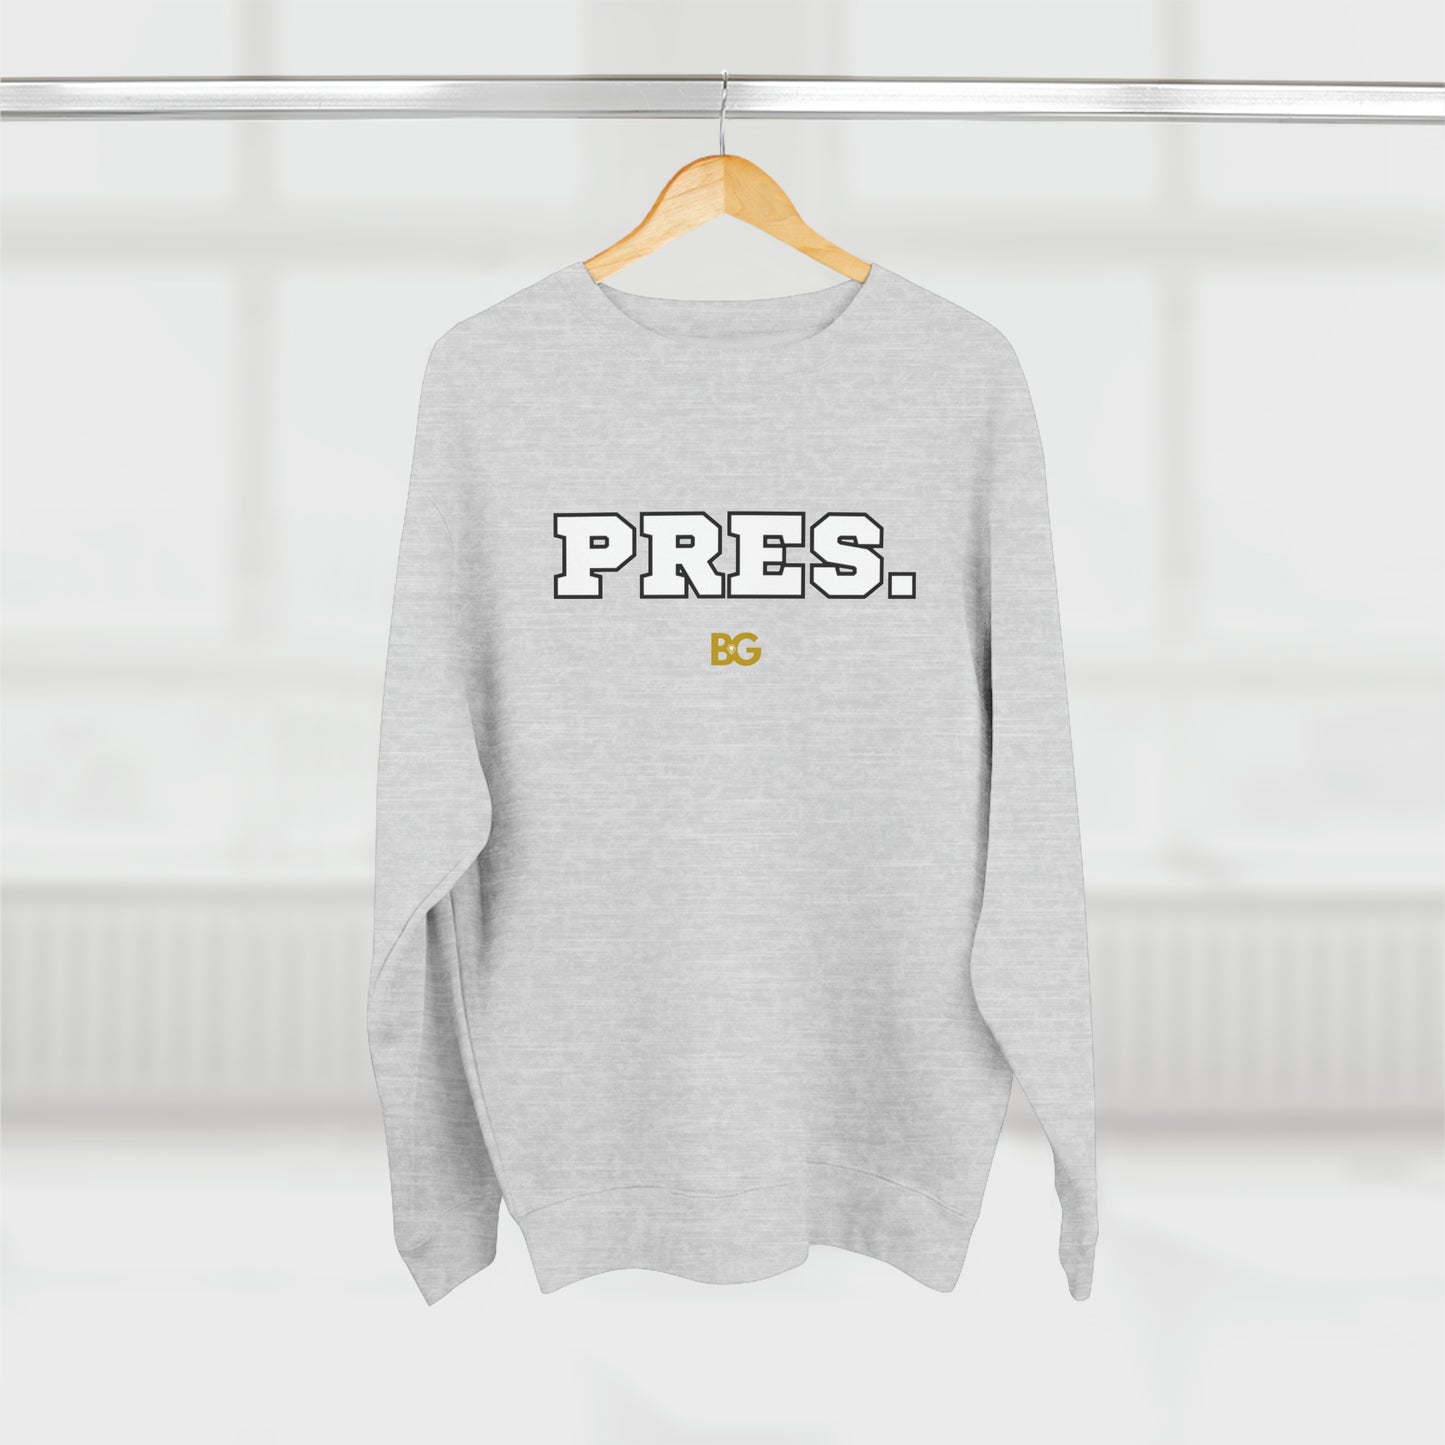 BG "PRES." Premium Crewneck Sweatshirt